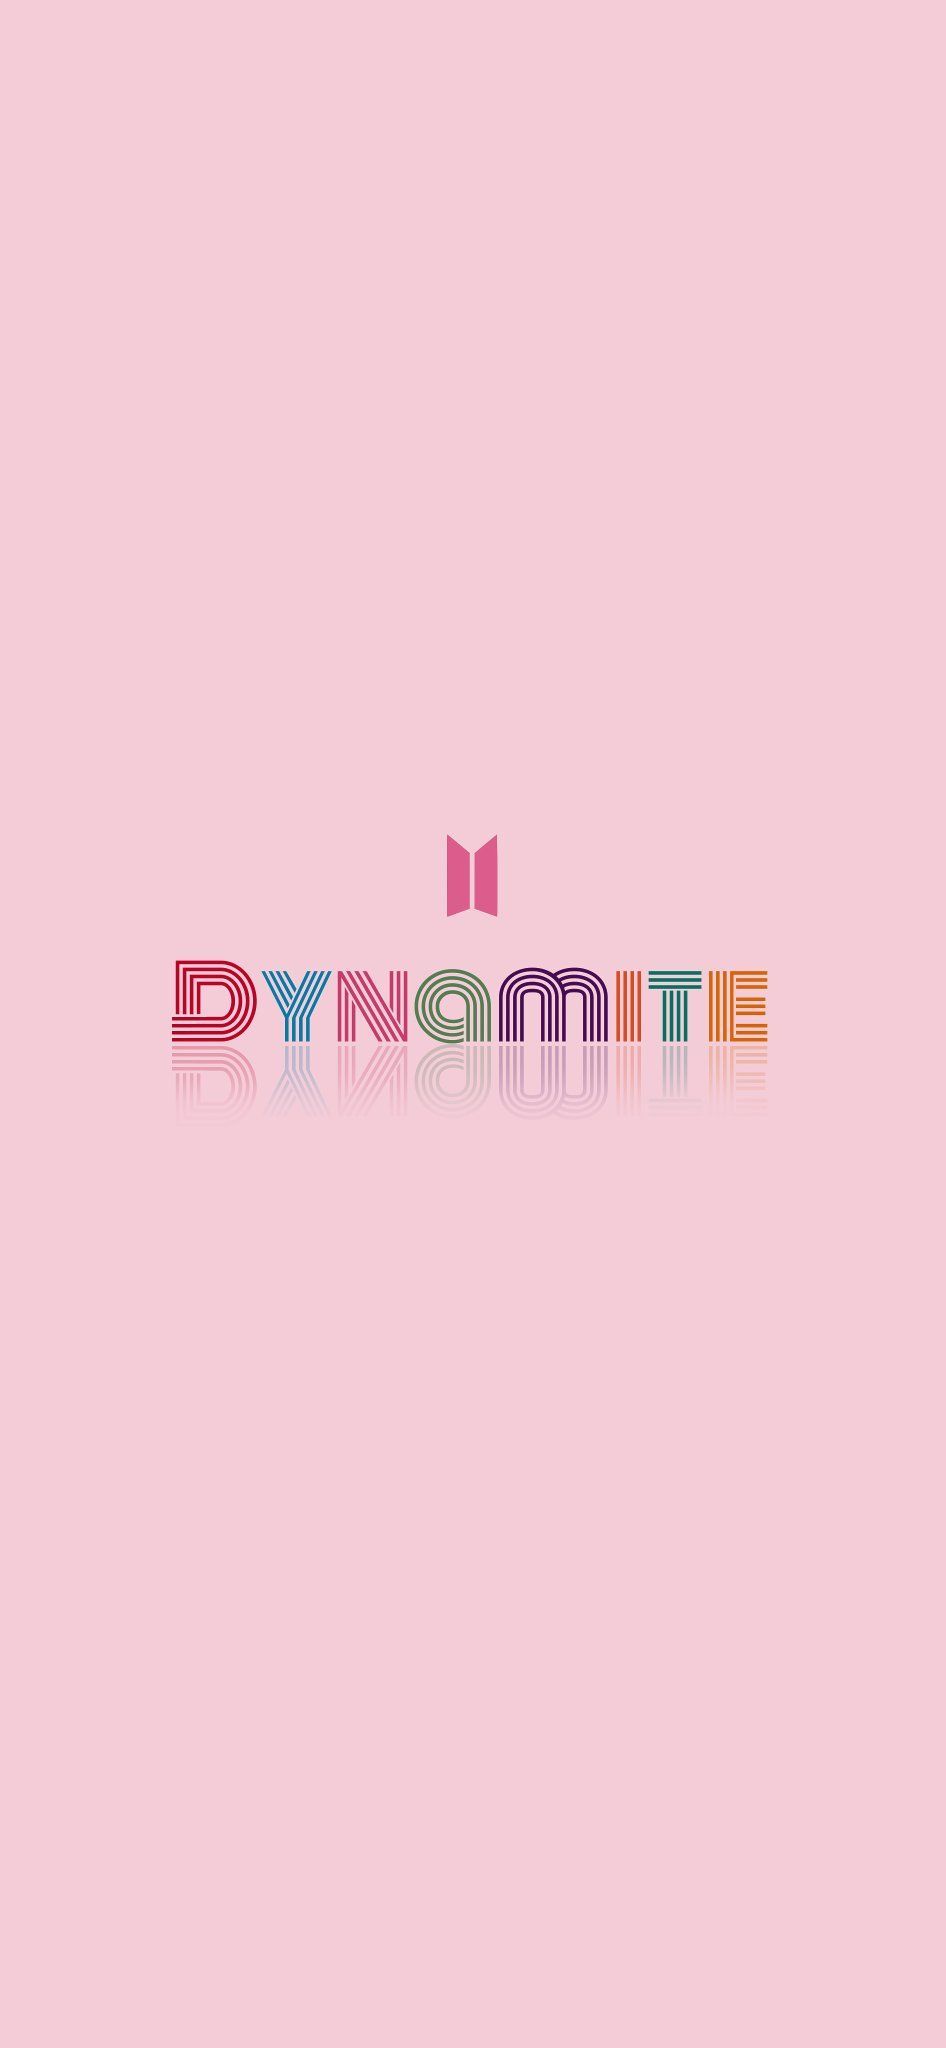 BTS Dynamite Wallpaper Lockscreen & Edit di 2020. Wallpaper ponsel, Bts, Gambar